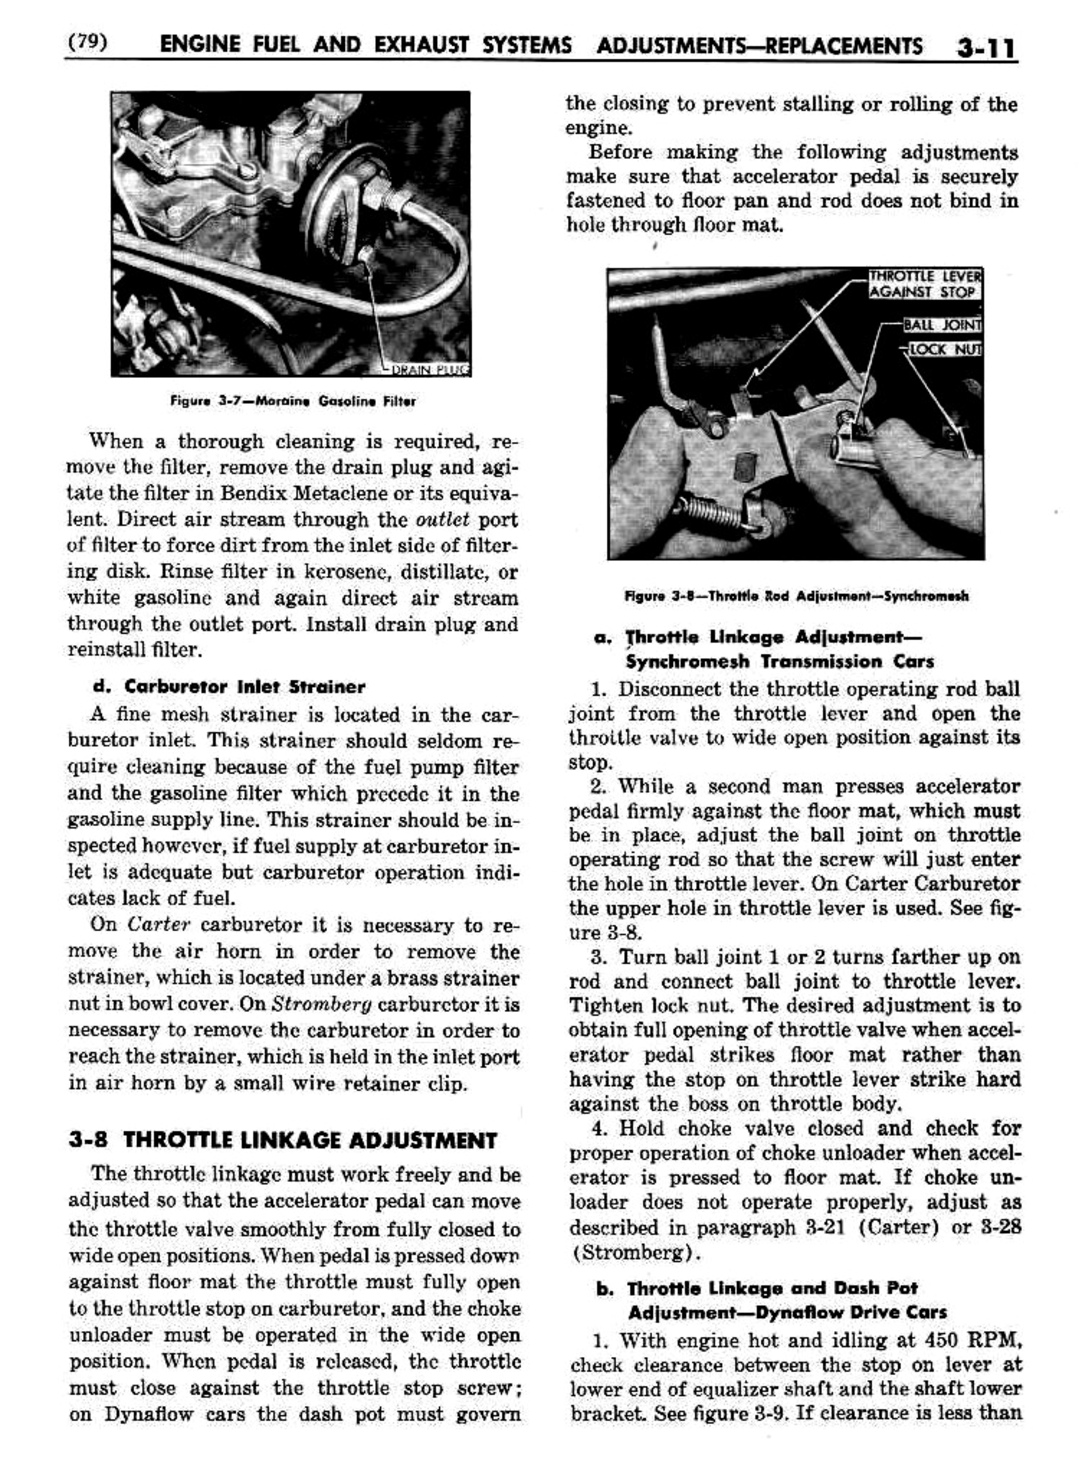 n_04 1951 Buick Shop Manual - Engine Fuel & Exhaust-011-011.jpg